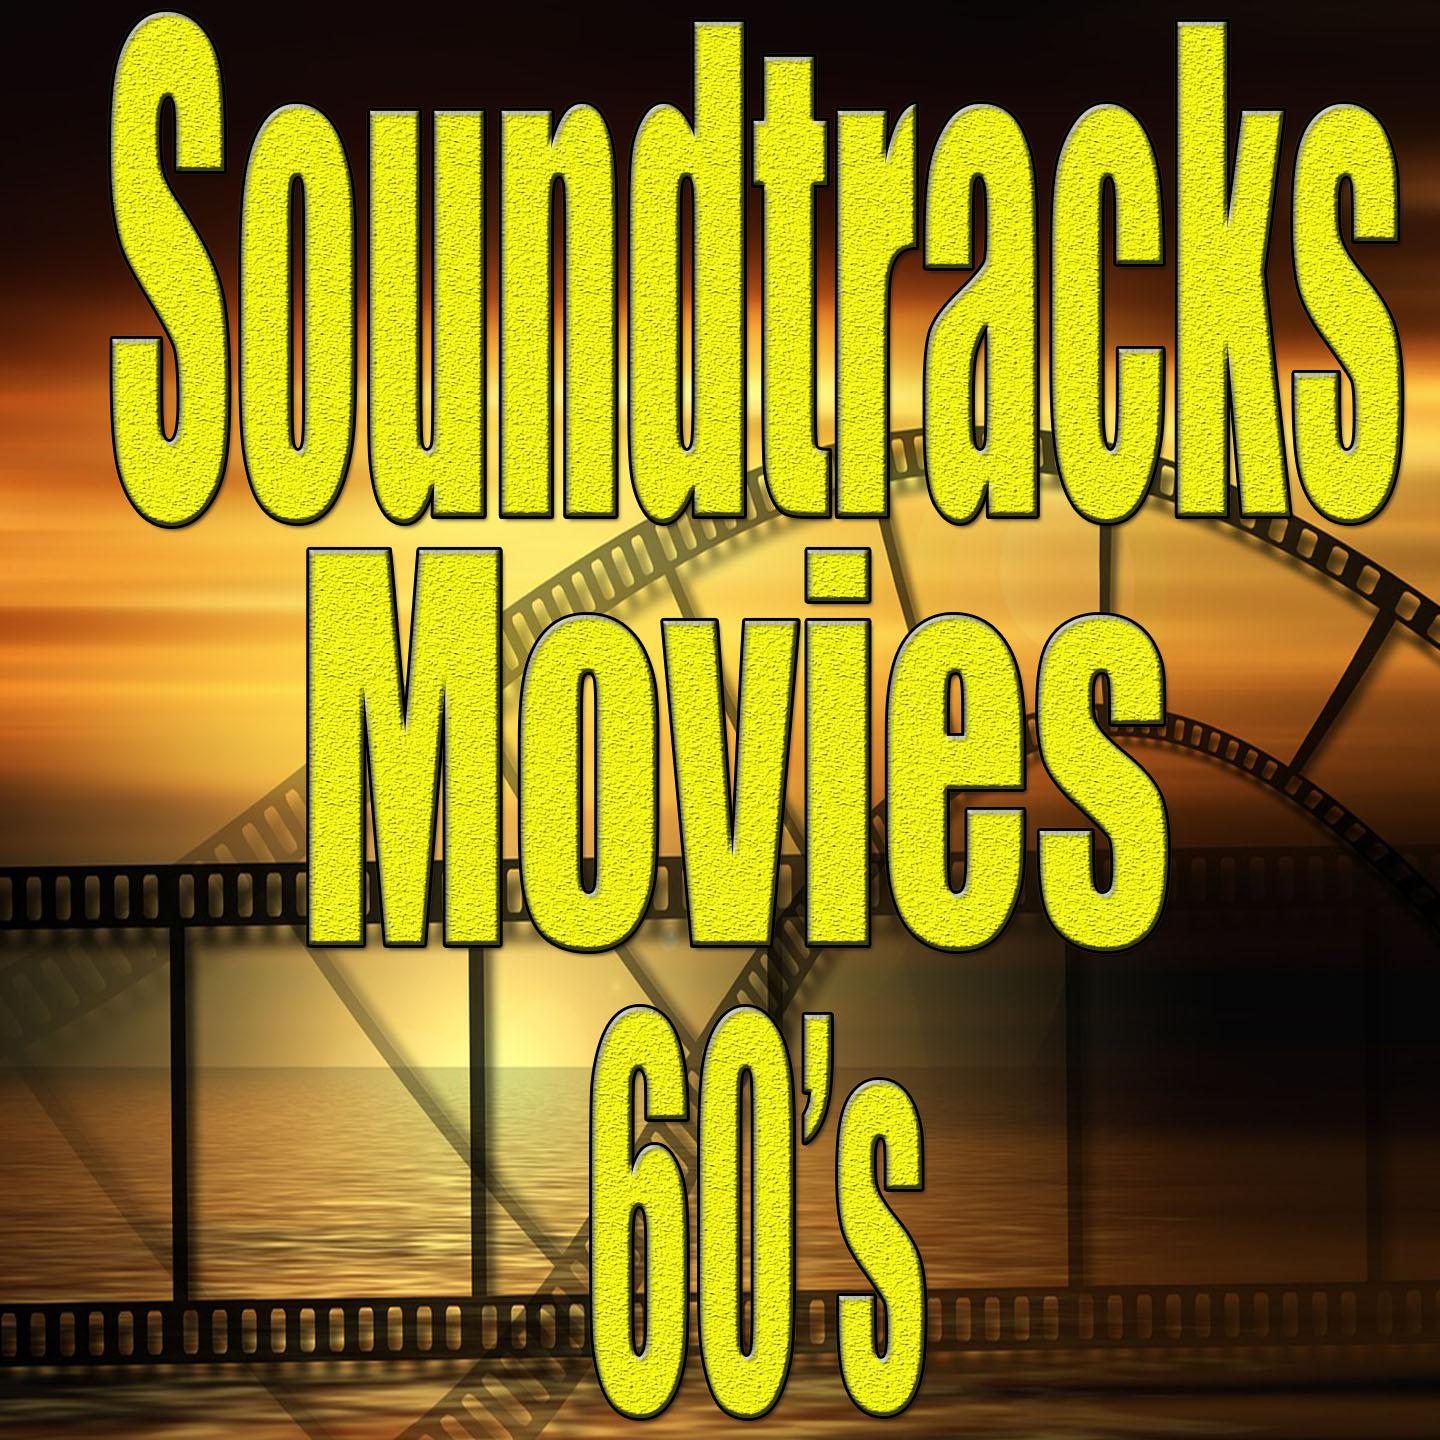 Soundtracks Movies 60's